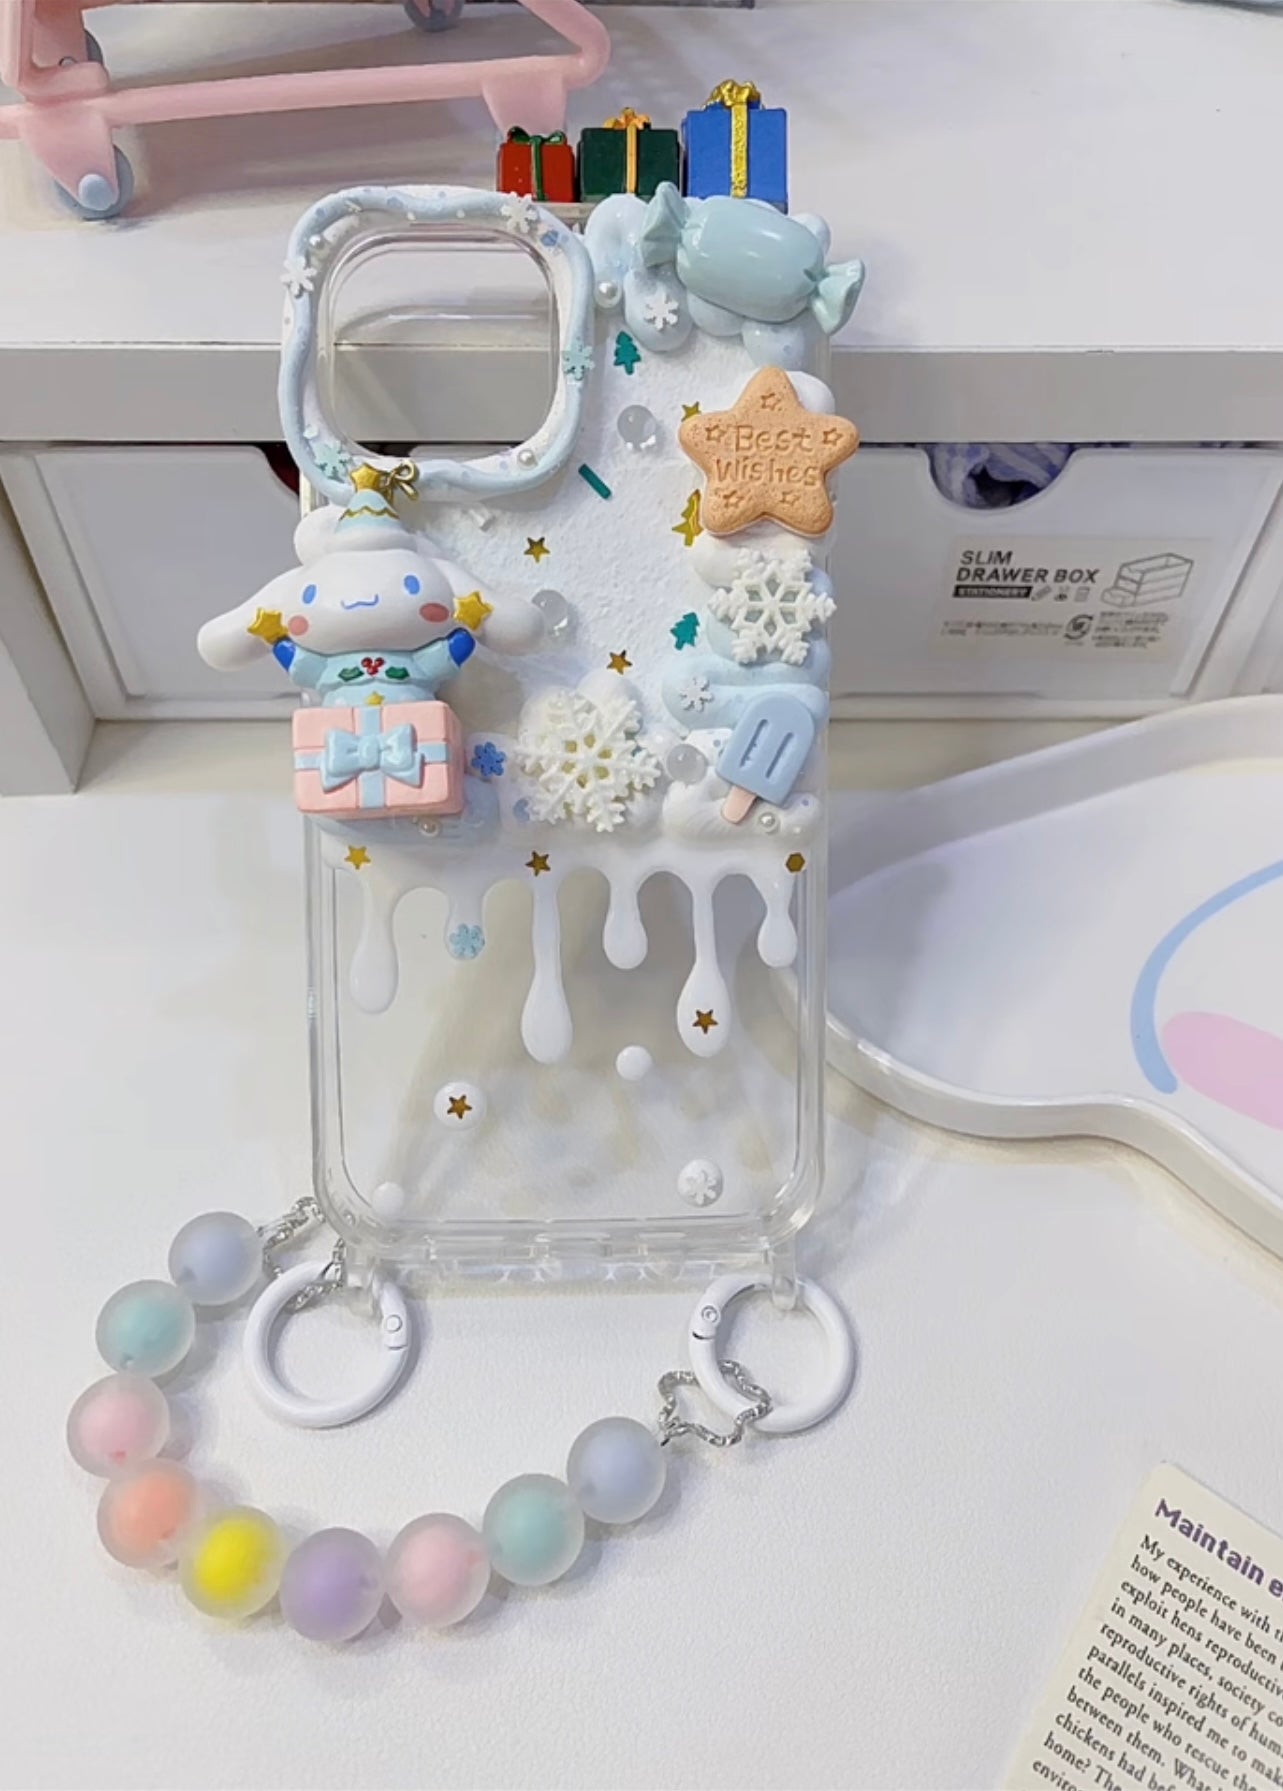 Handmade Candy Pastel Cute Cartoon 3D DIY iPhone 11 Phone Case Decoden Cream